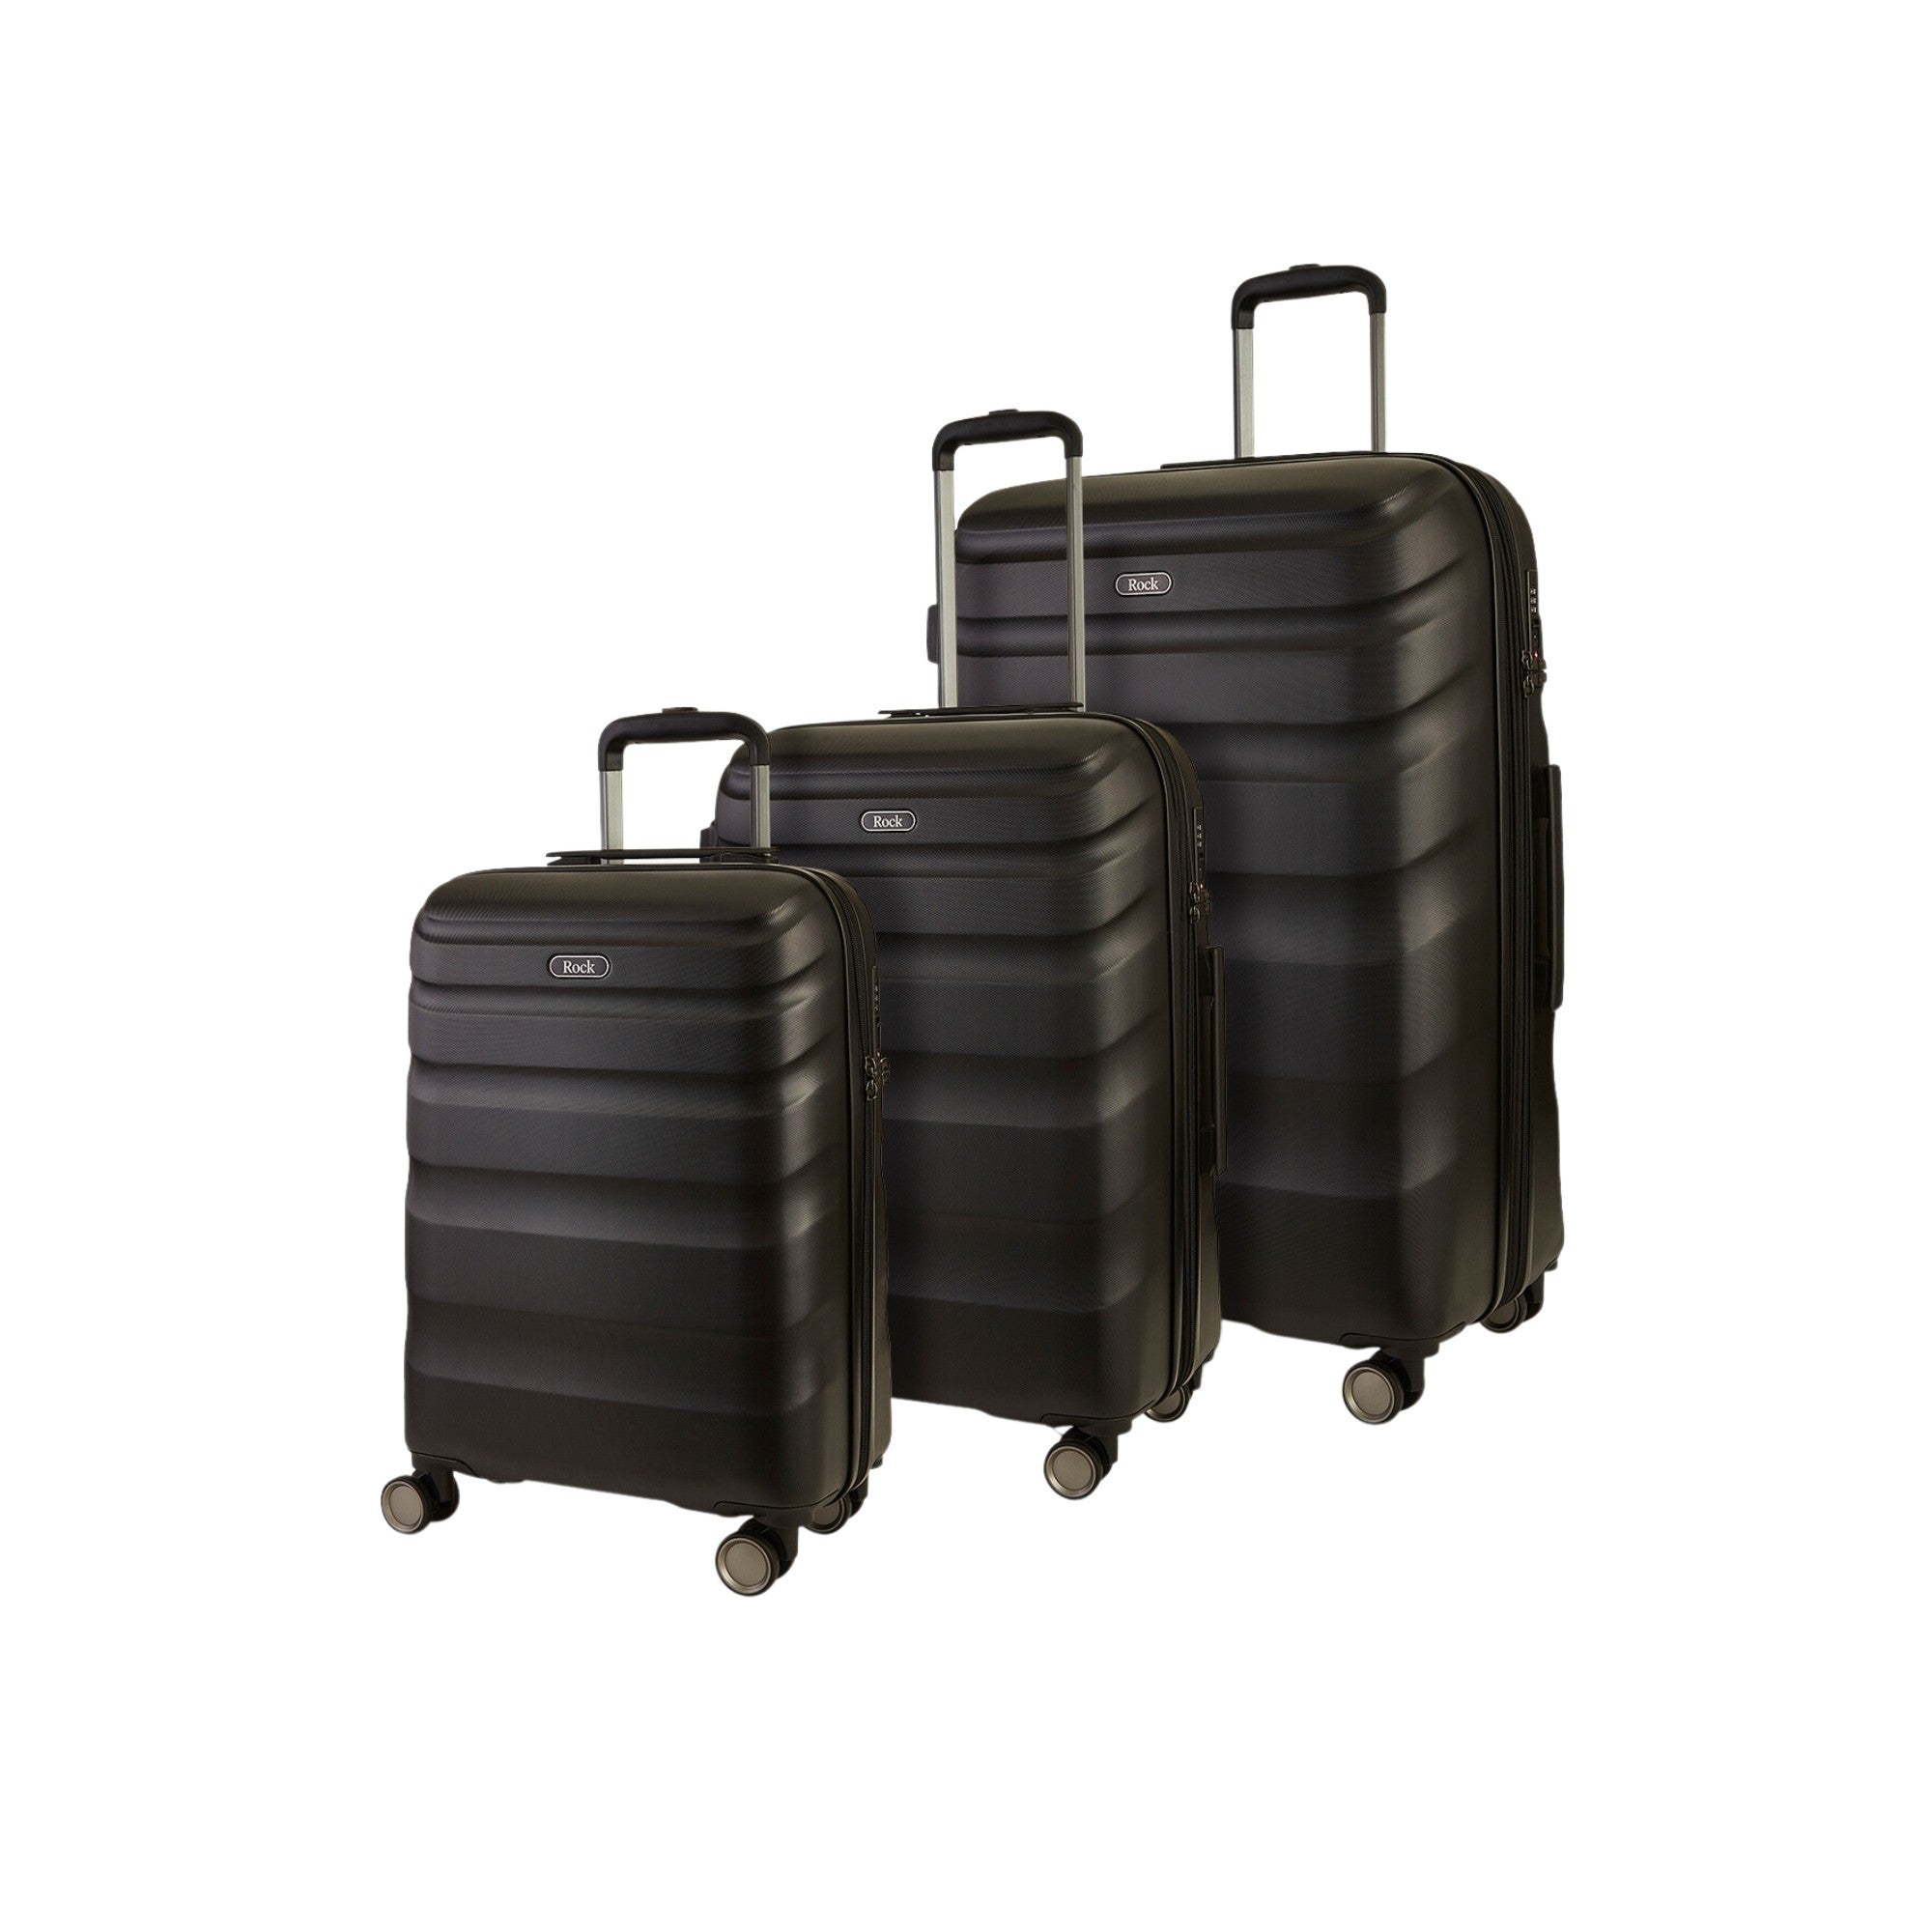 Rock Luggage Bali Set of 3 Suitcases